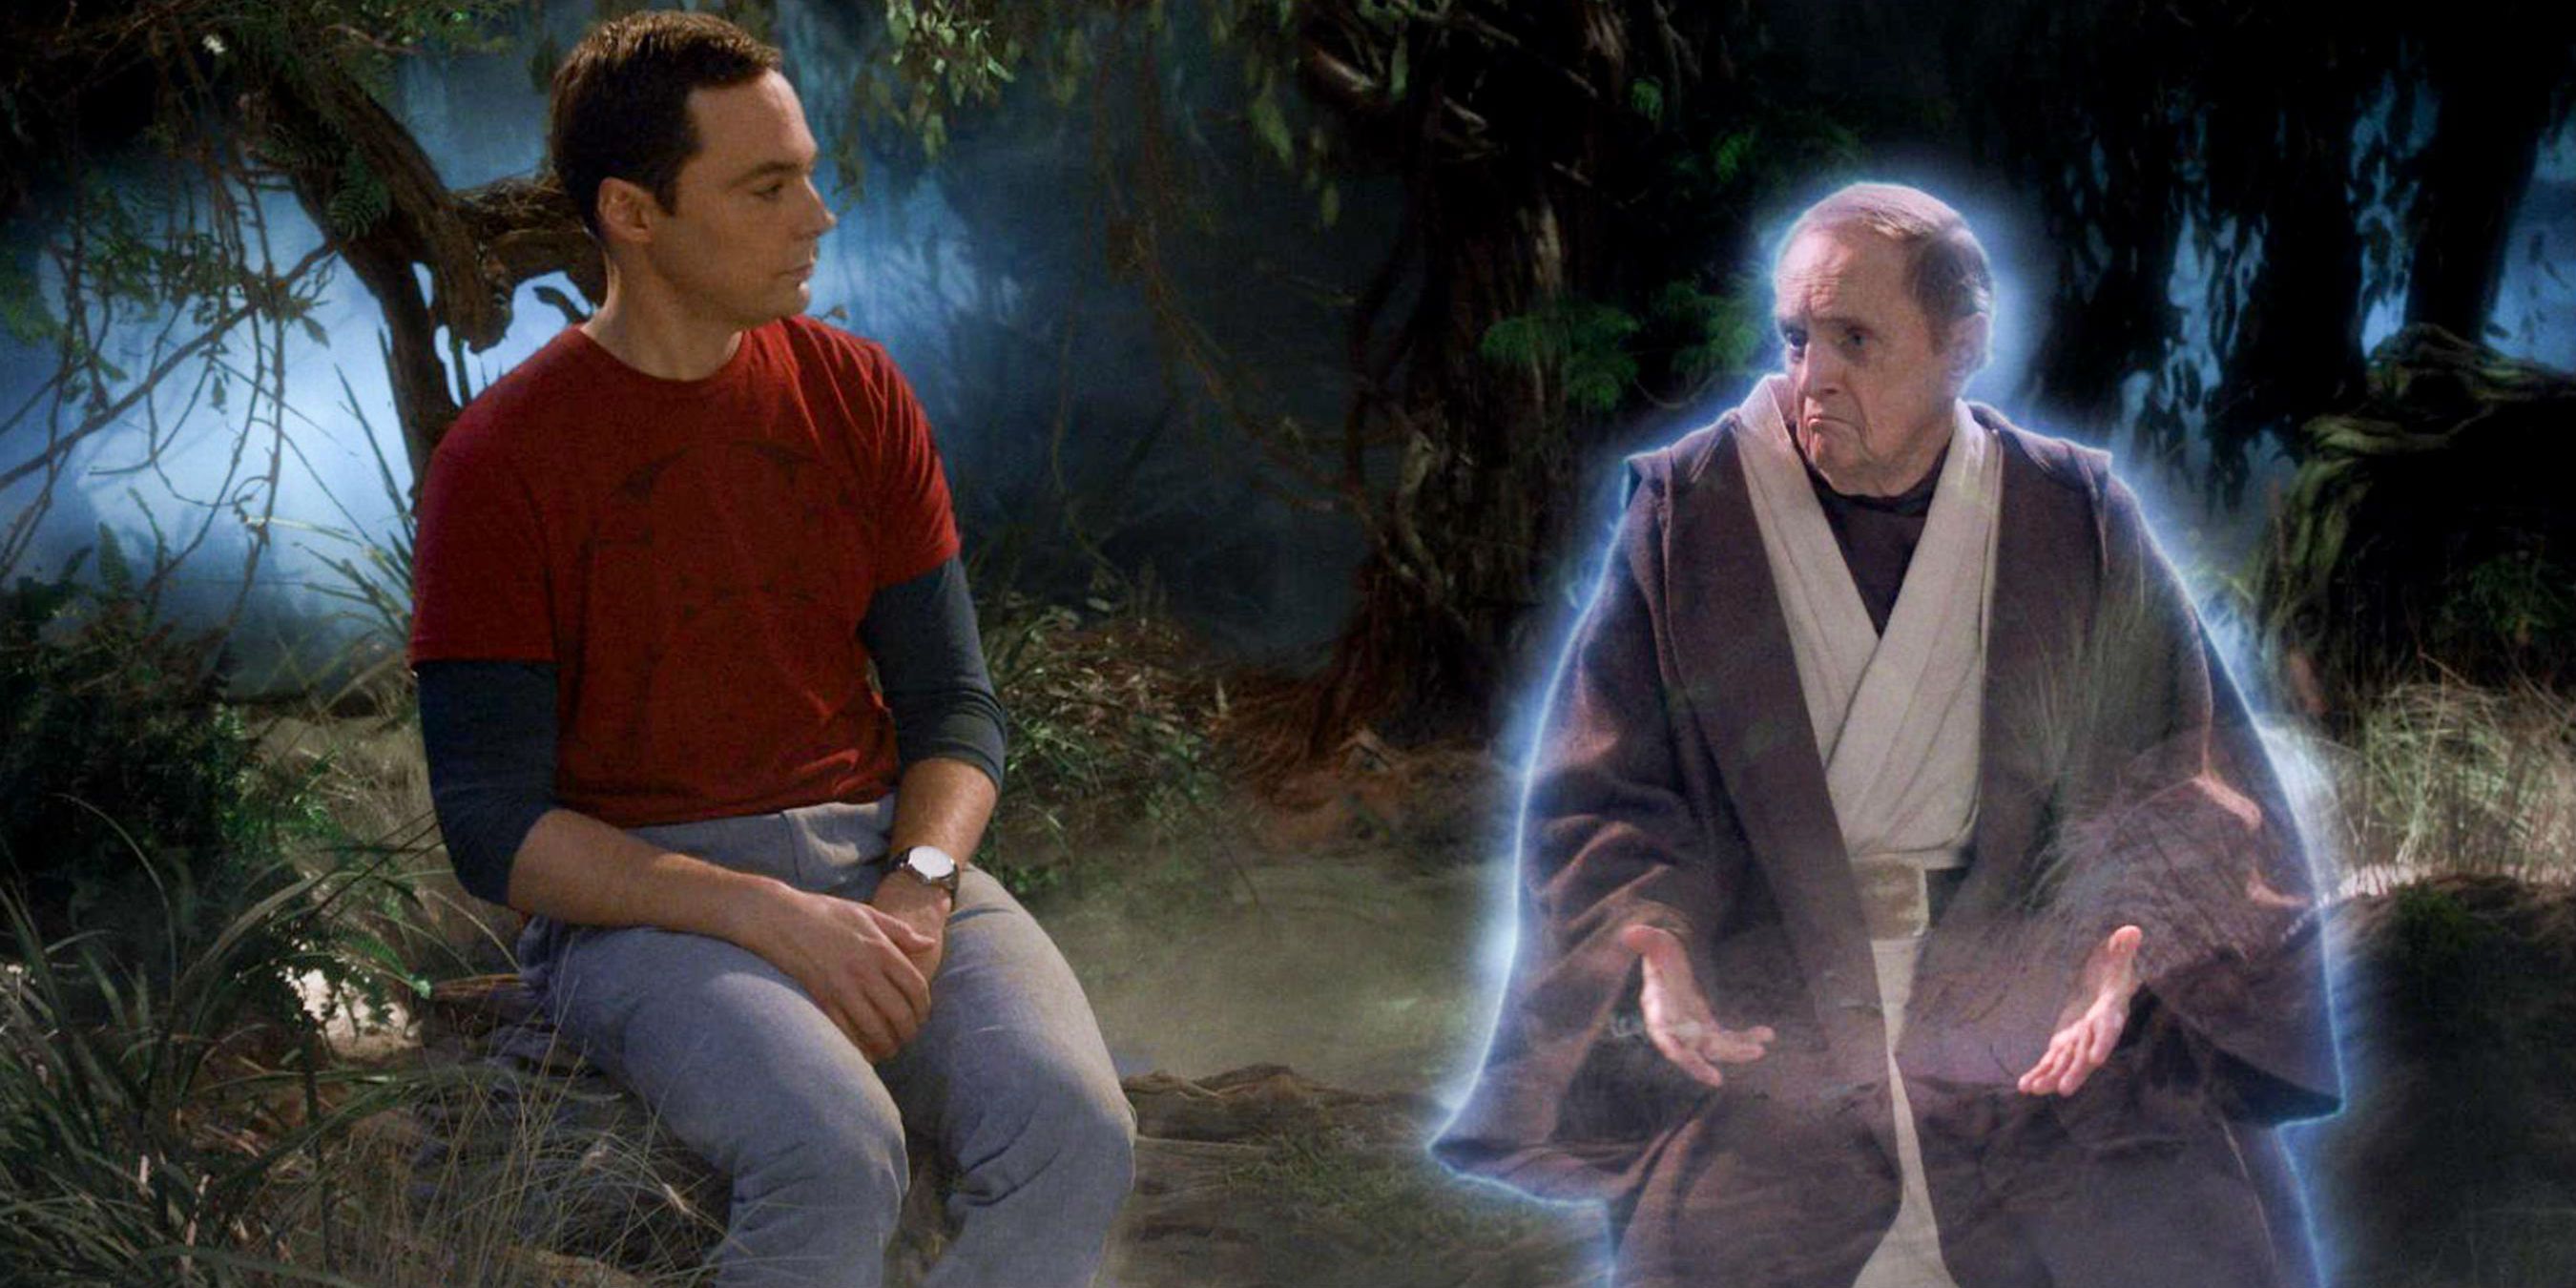 Sheldon and Professor Proton in The Big Bang Theory 1